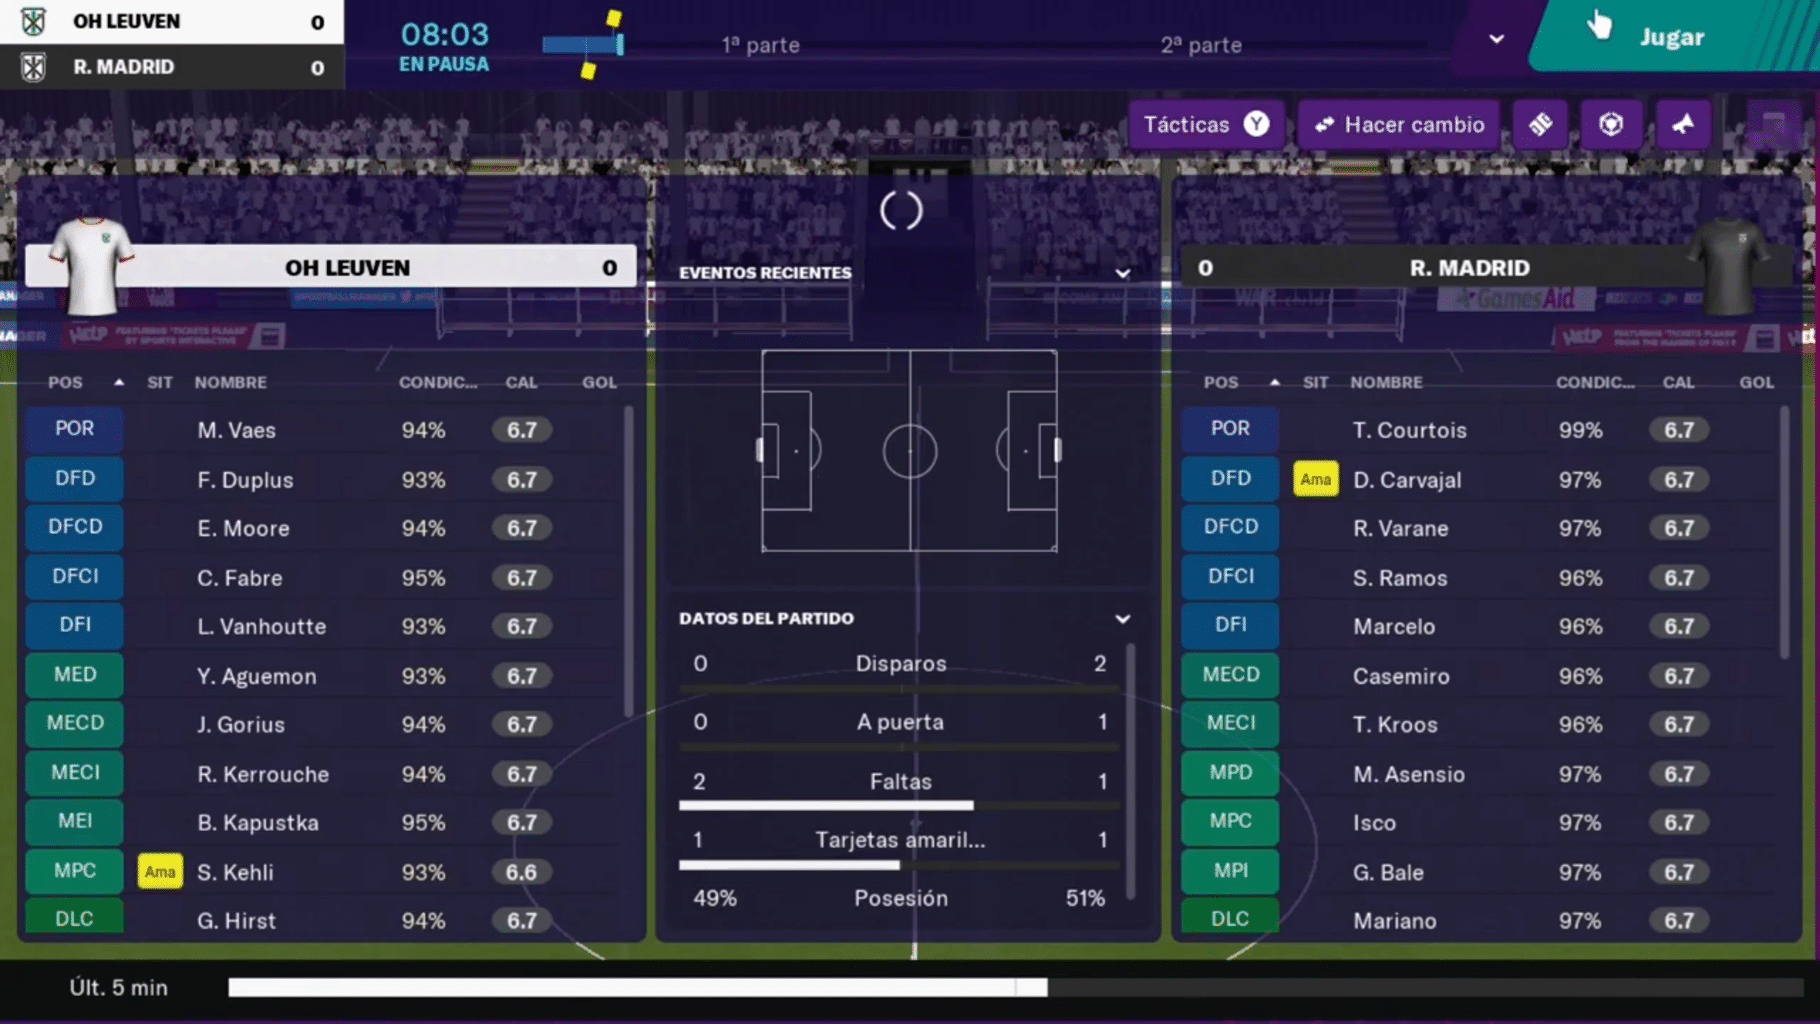 Football Manager 2019 Touch screenshot